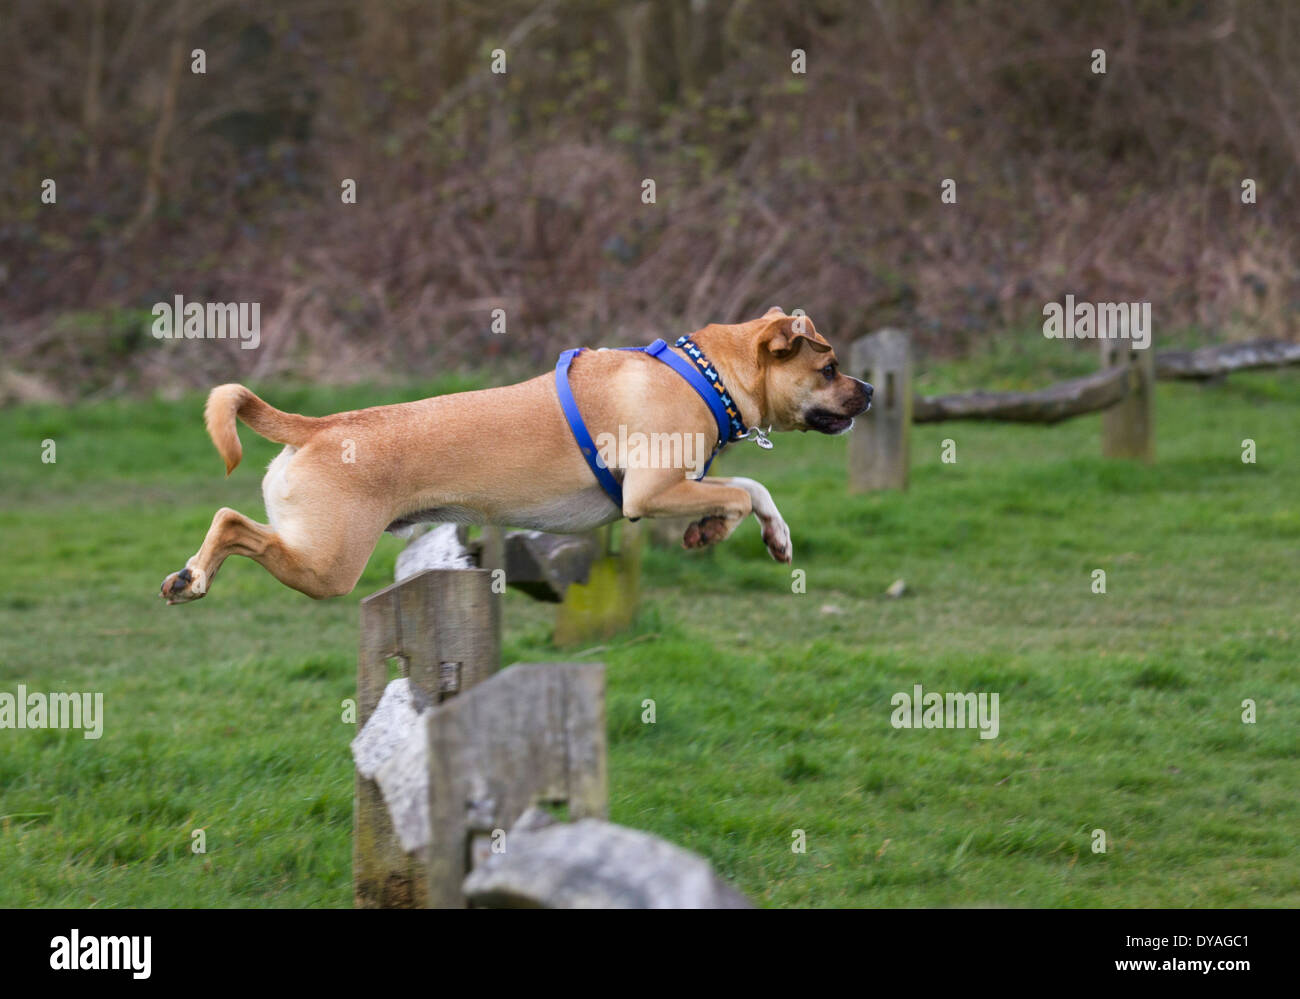 puggle dog jumping a fence Stock Photo